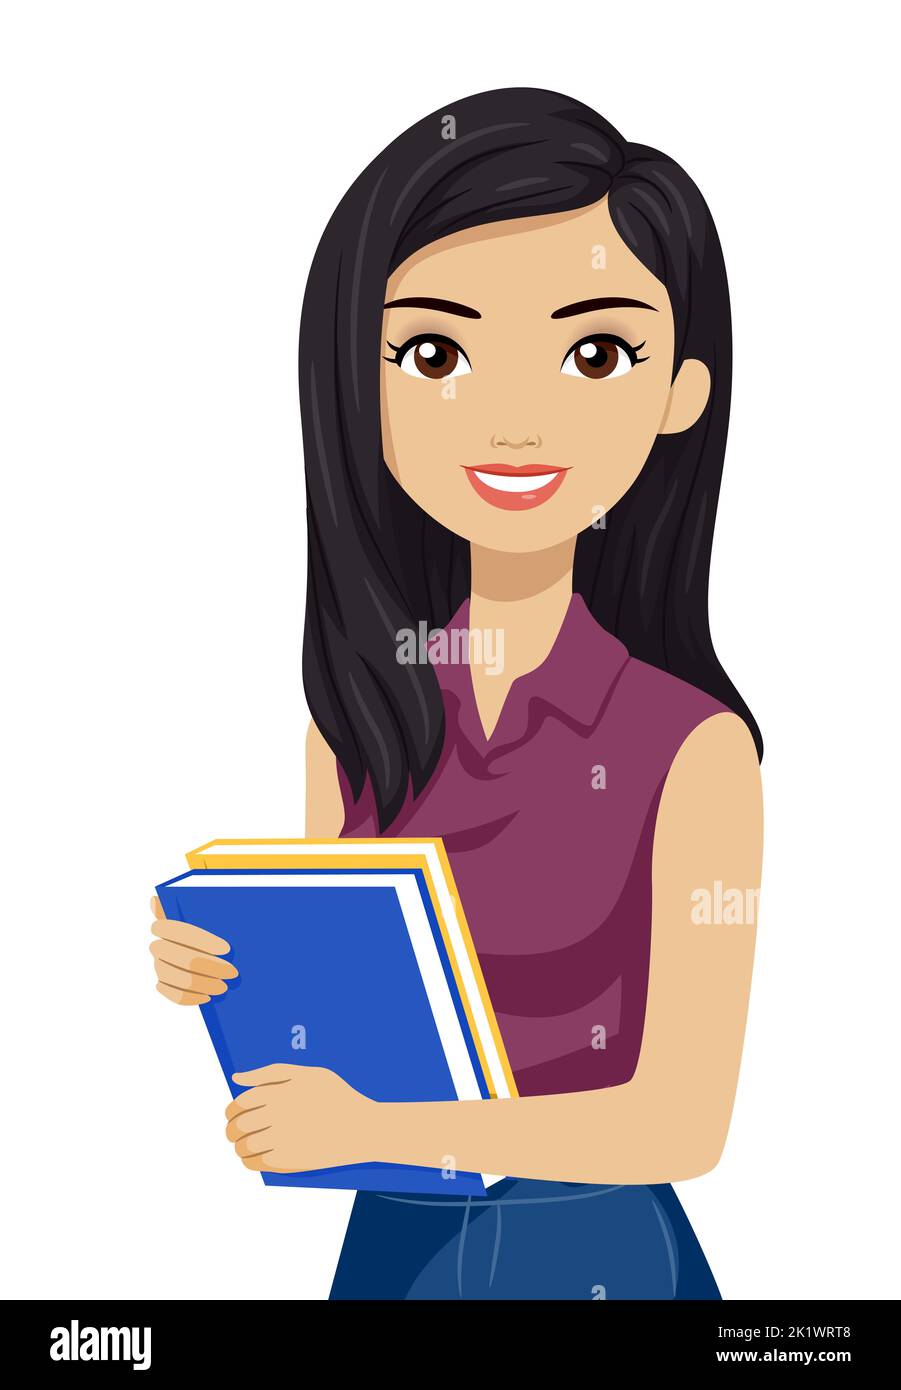 Illustration of South East Asian Teen Girl Student Holding Books Stock ...